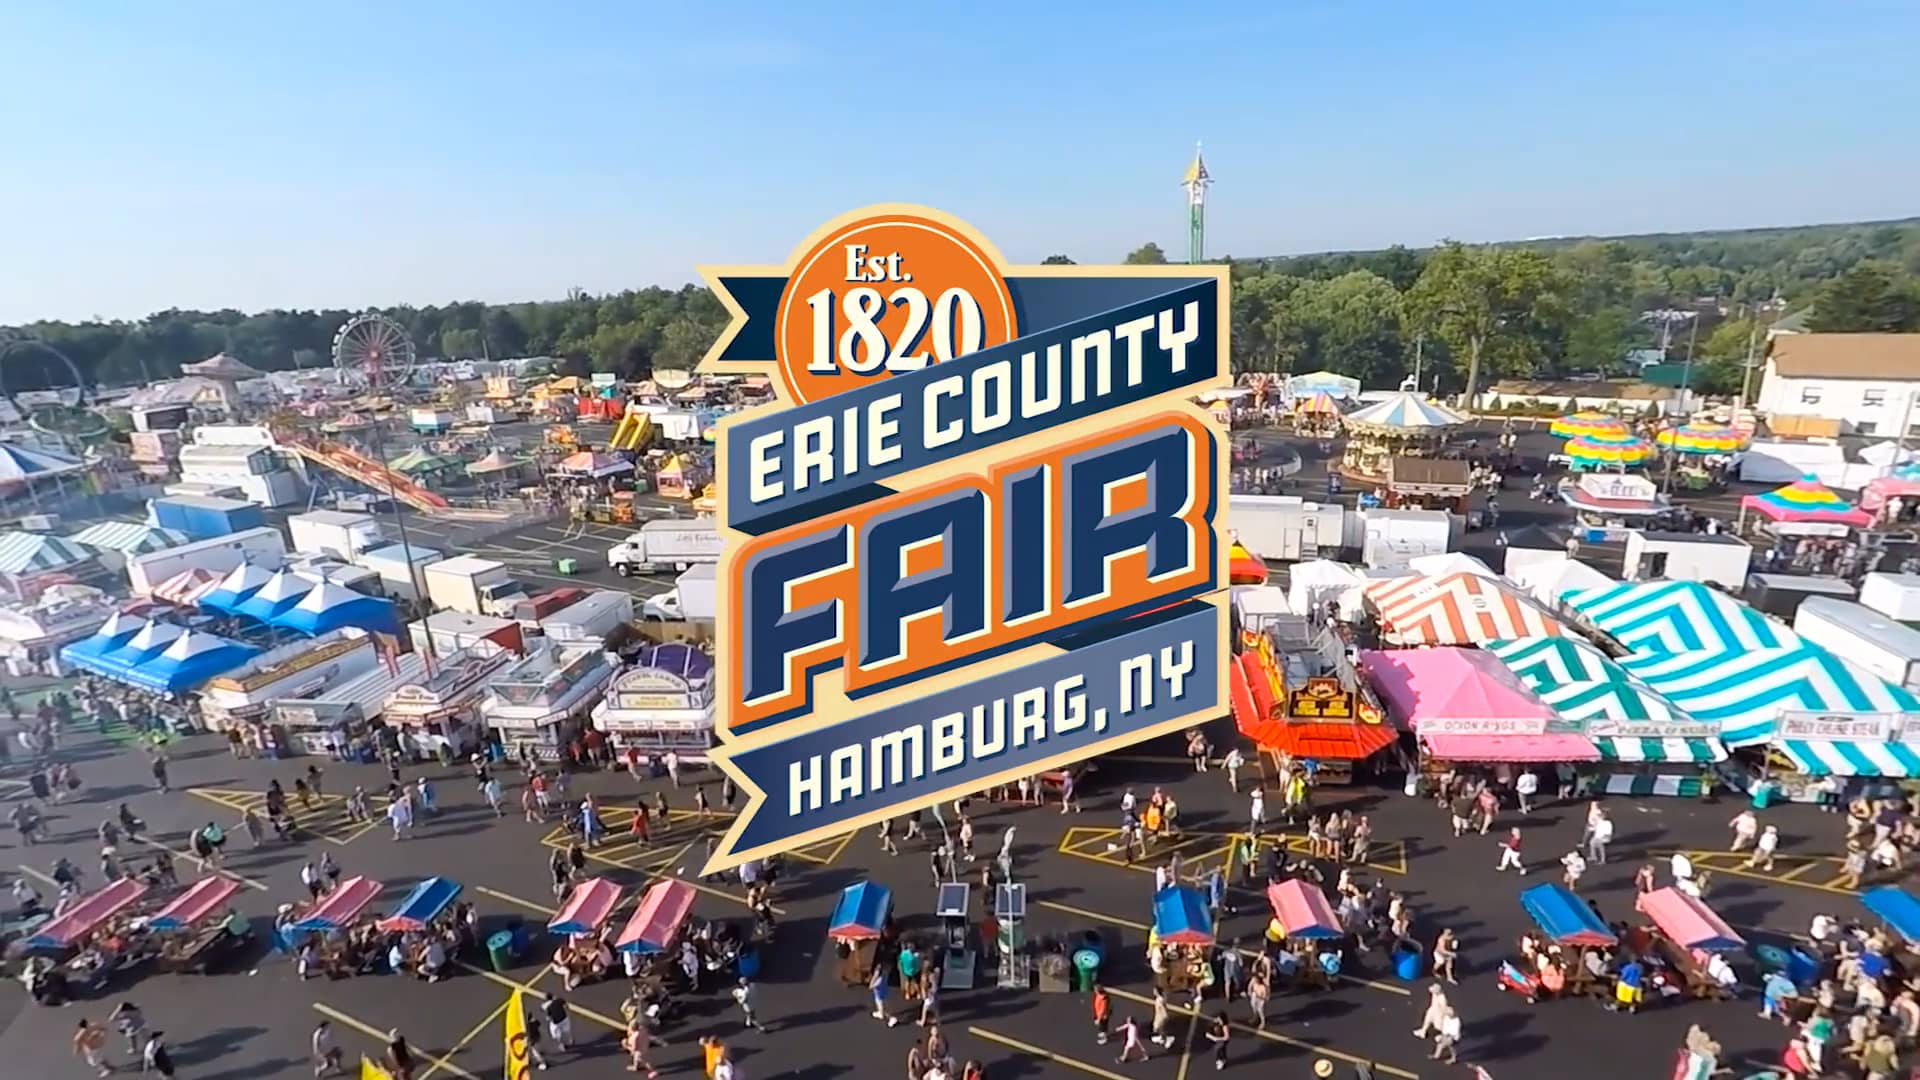 Erie County Fair Promo on Vimeo